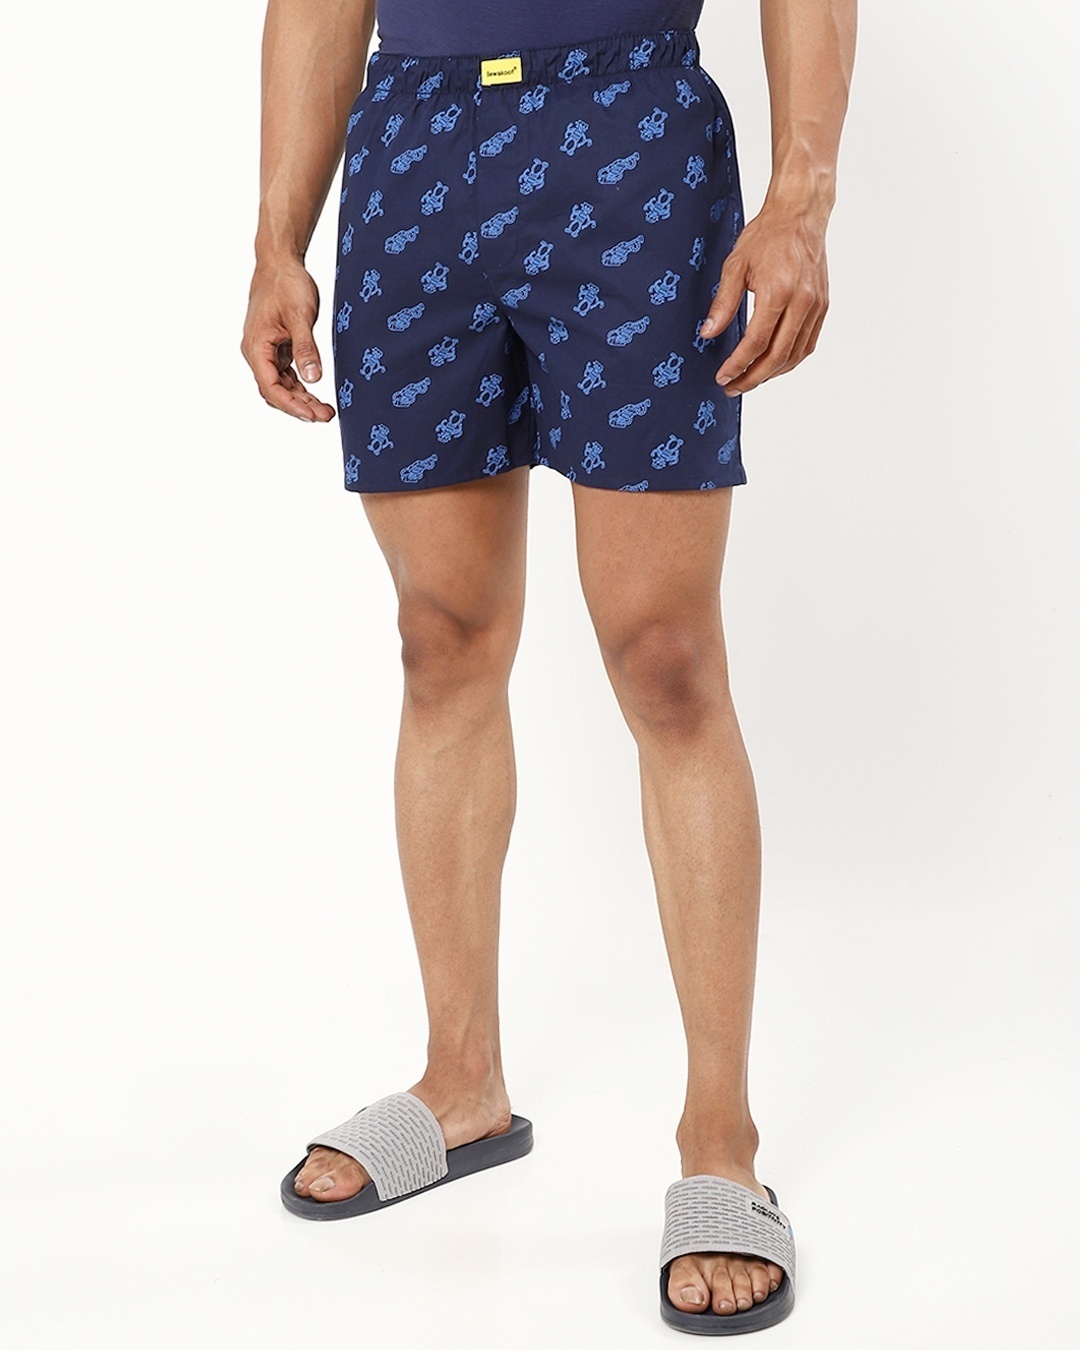 Shop Men's Blue All Over Printed Boxers-Design